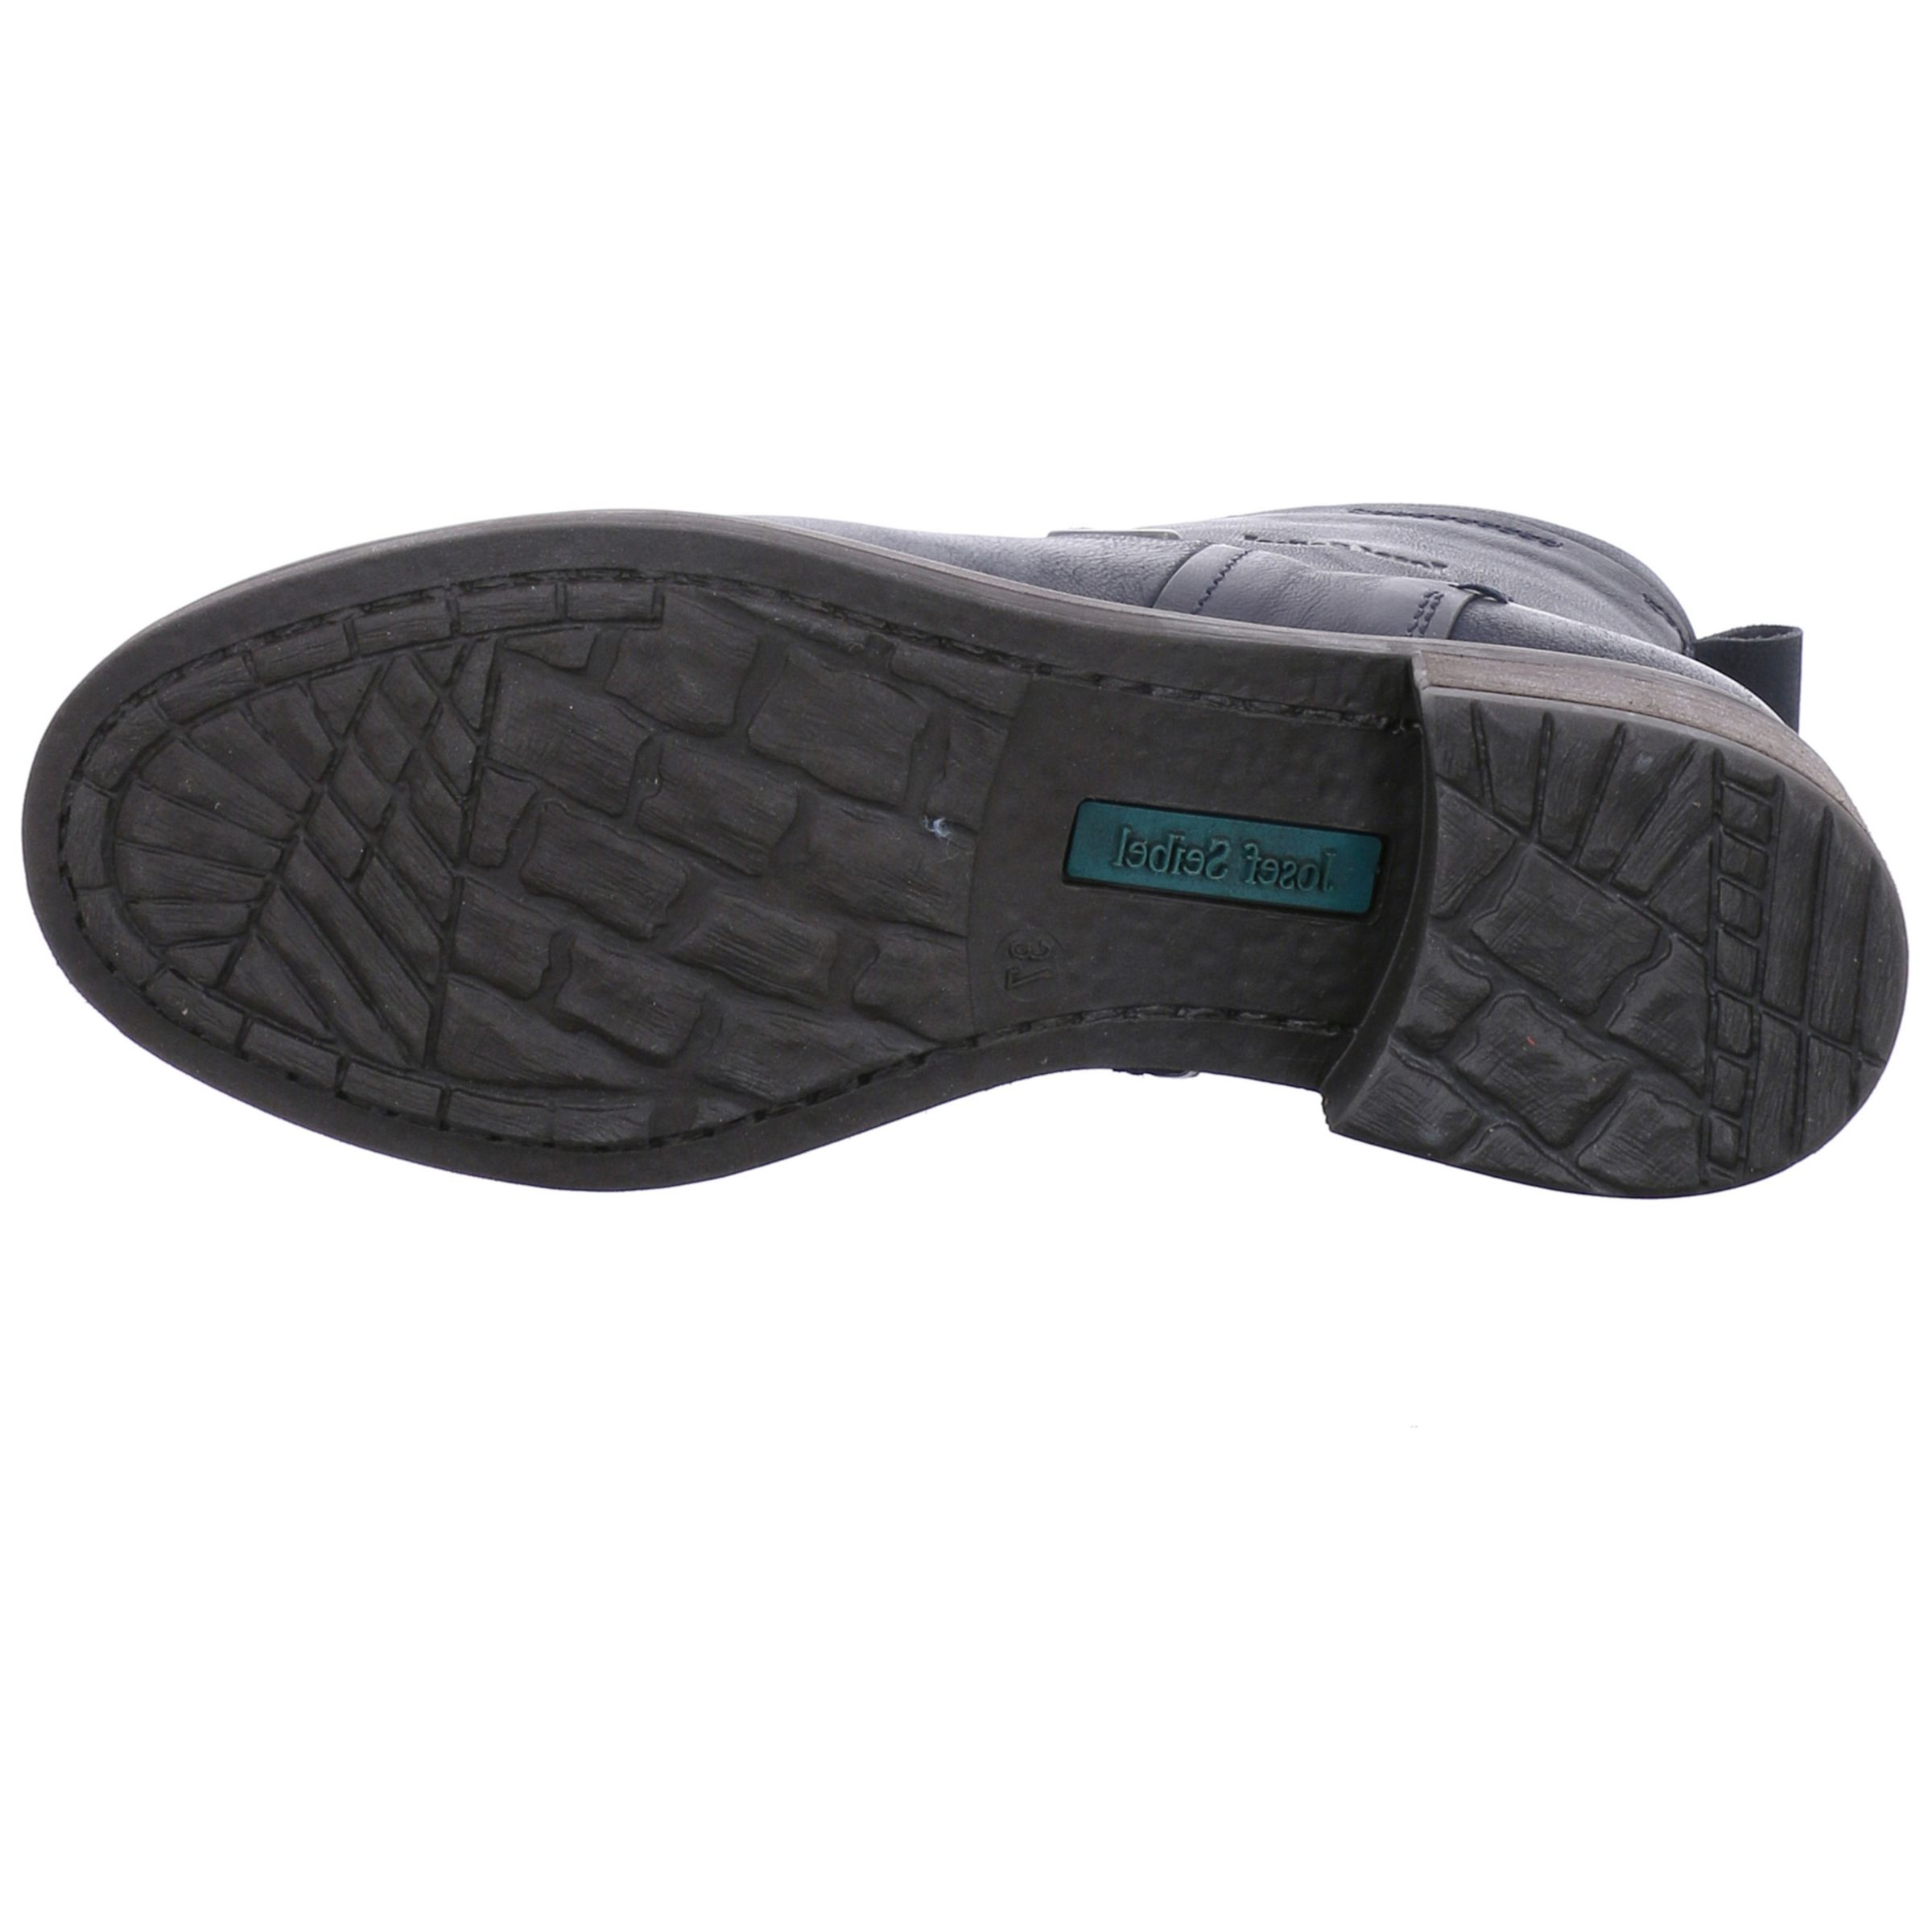 Josef Seibel Selena 50 Waterproof Ankle Boots, Ocean, 3